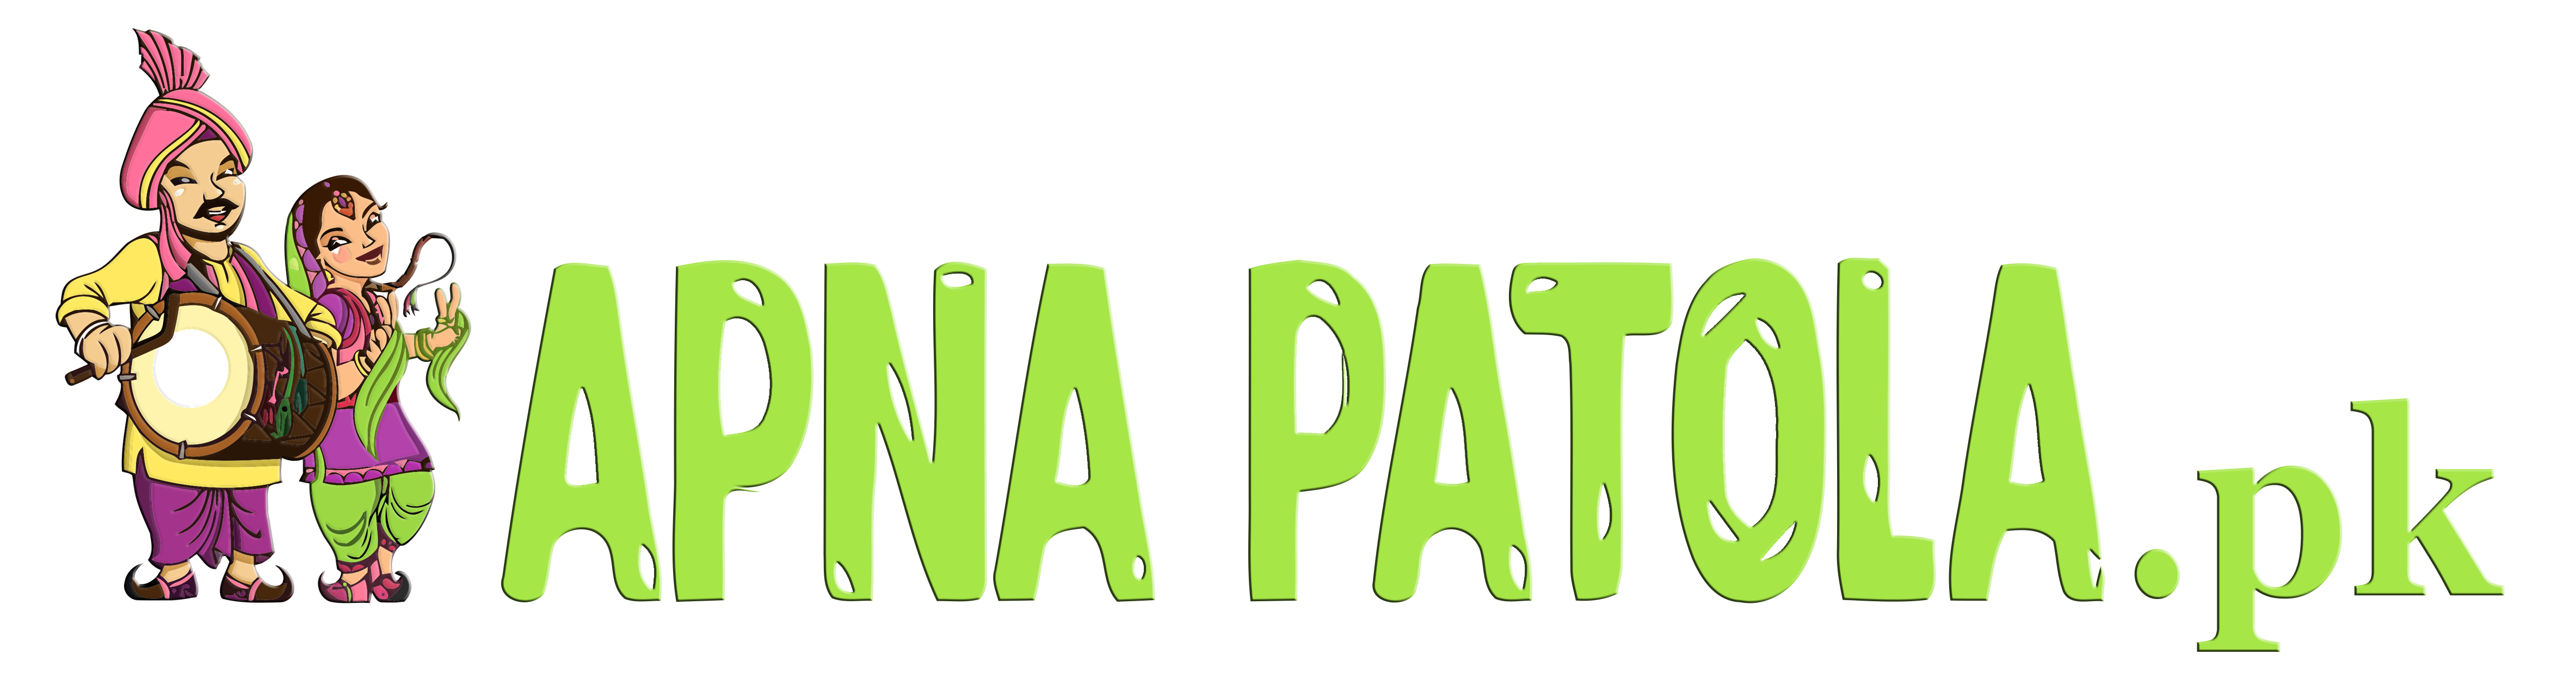 Shop Online in Pakistan with APNA PATOLA